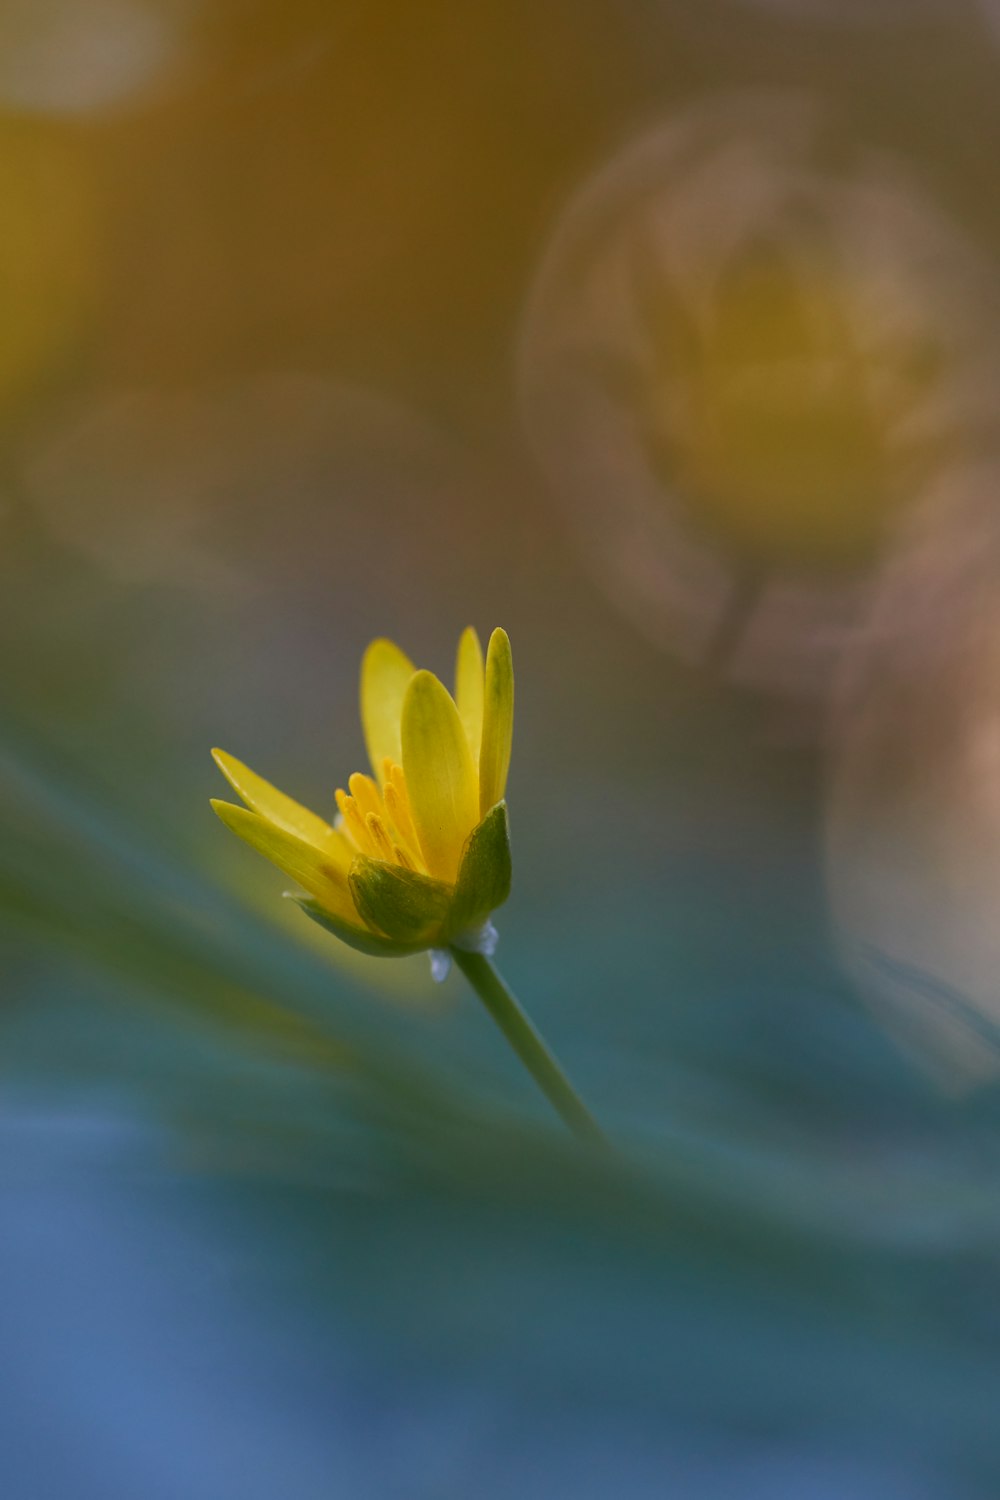 Flor amarela na lente tilt shift foto – Pianta Immagine gratuita su Unsplash